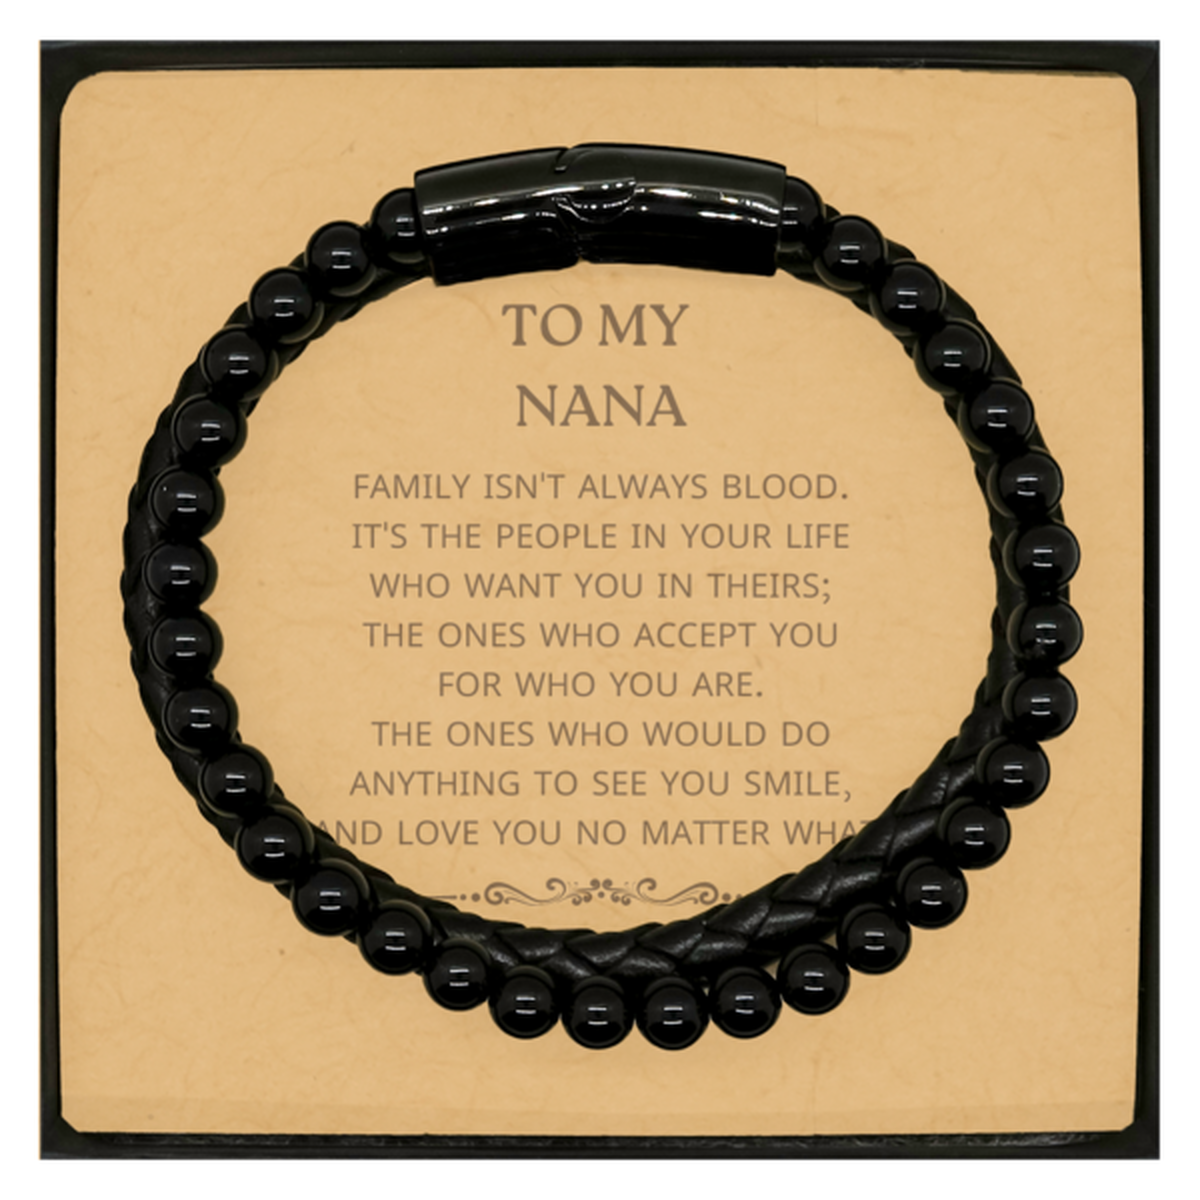 To My Nana Gifts, Family isn't always blood, Nana Stone Leather Bracelets, Birthday Christmas Unique Present For Nana